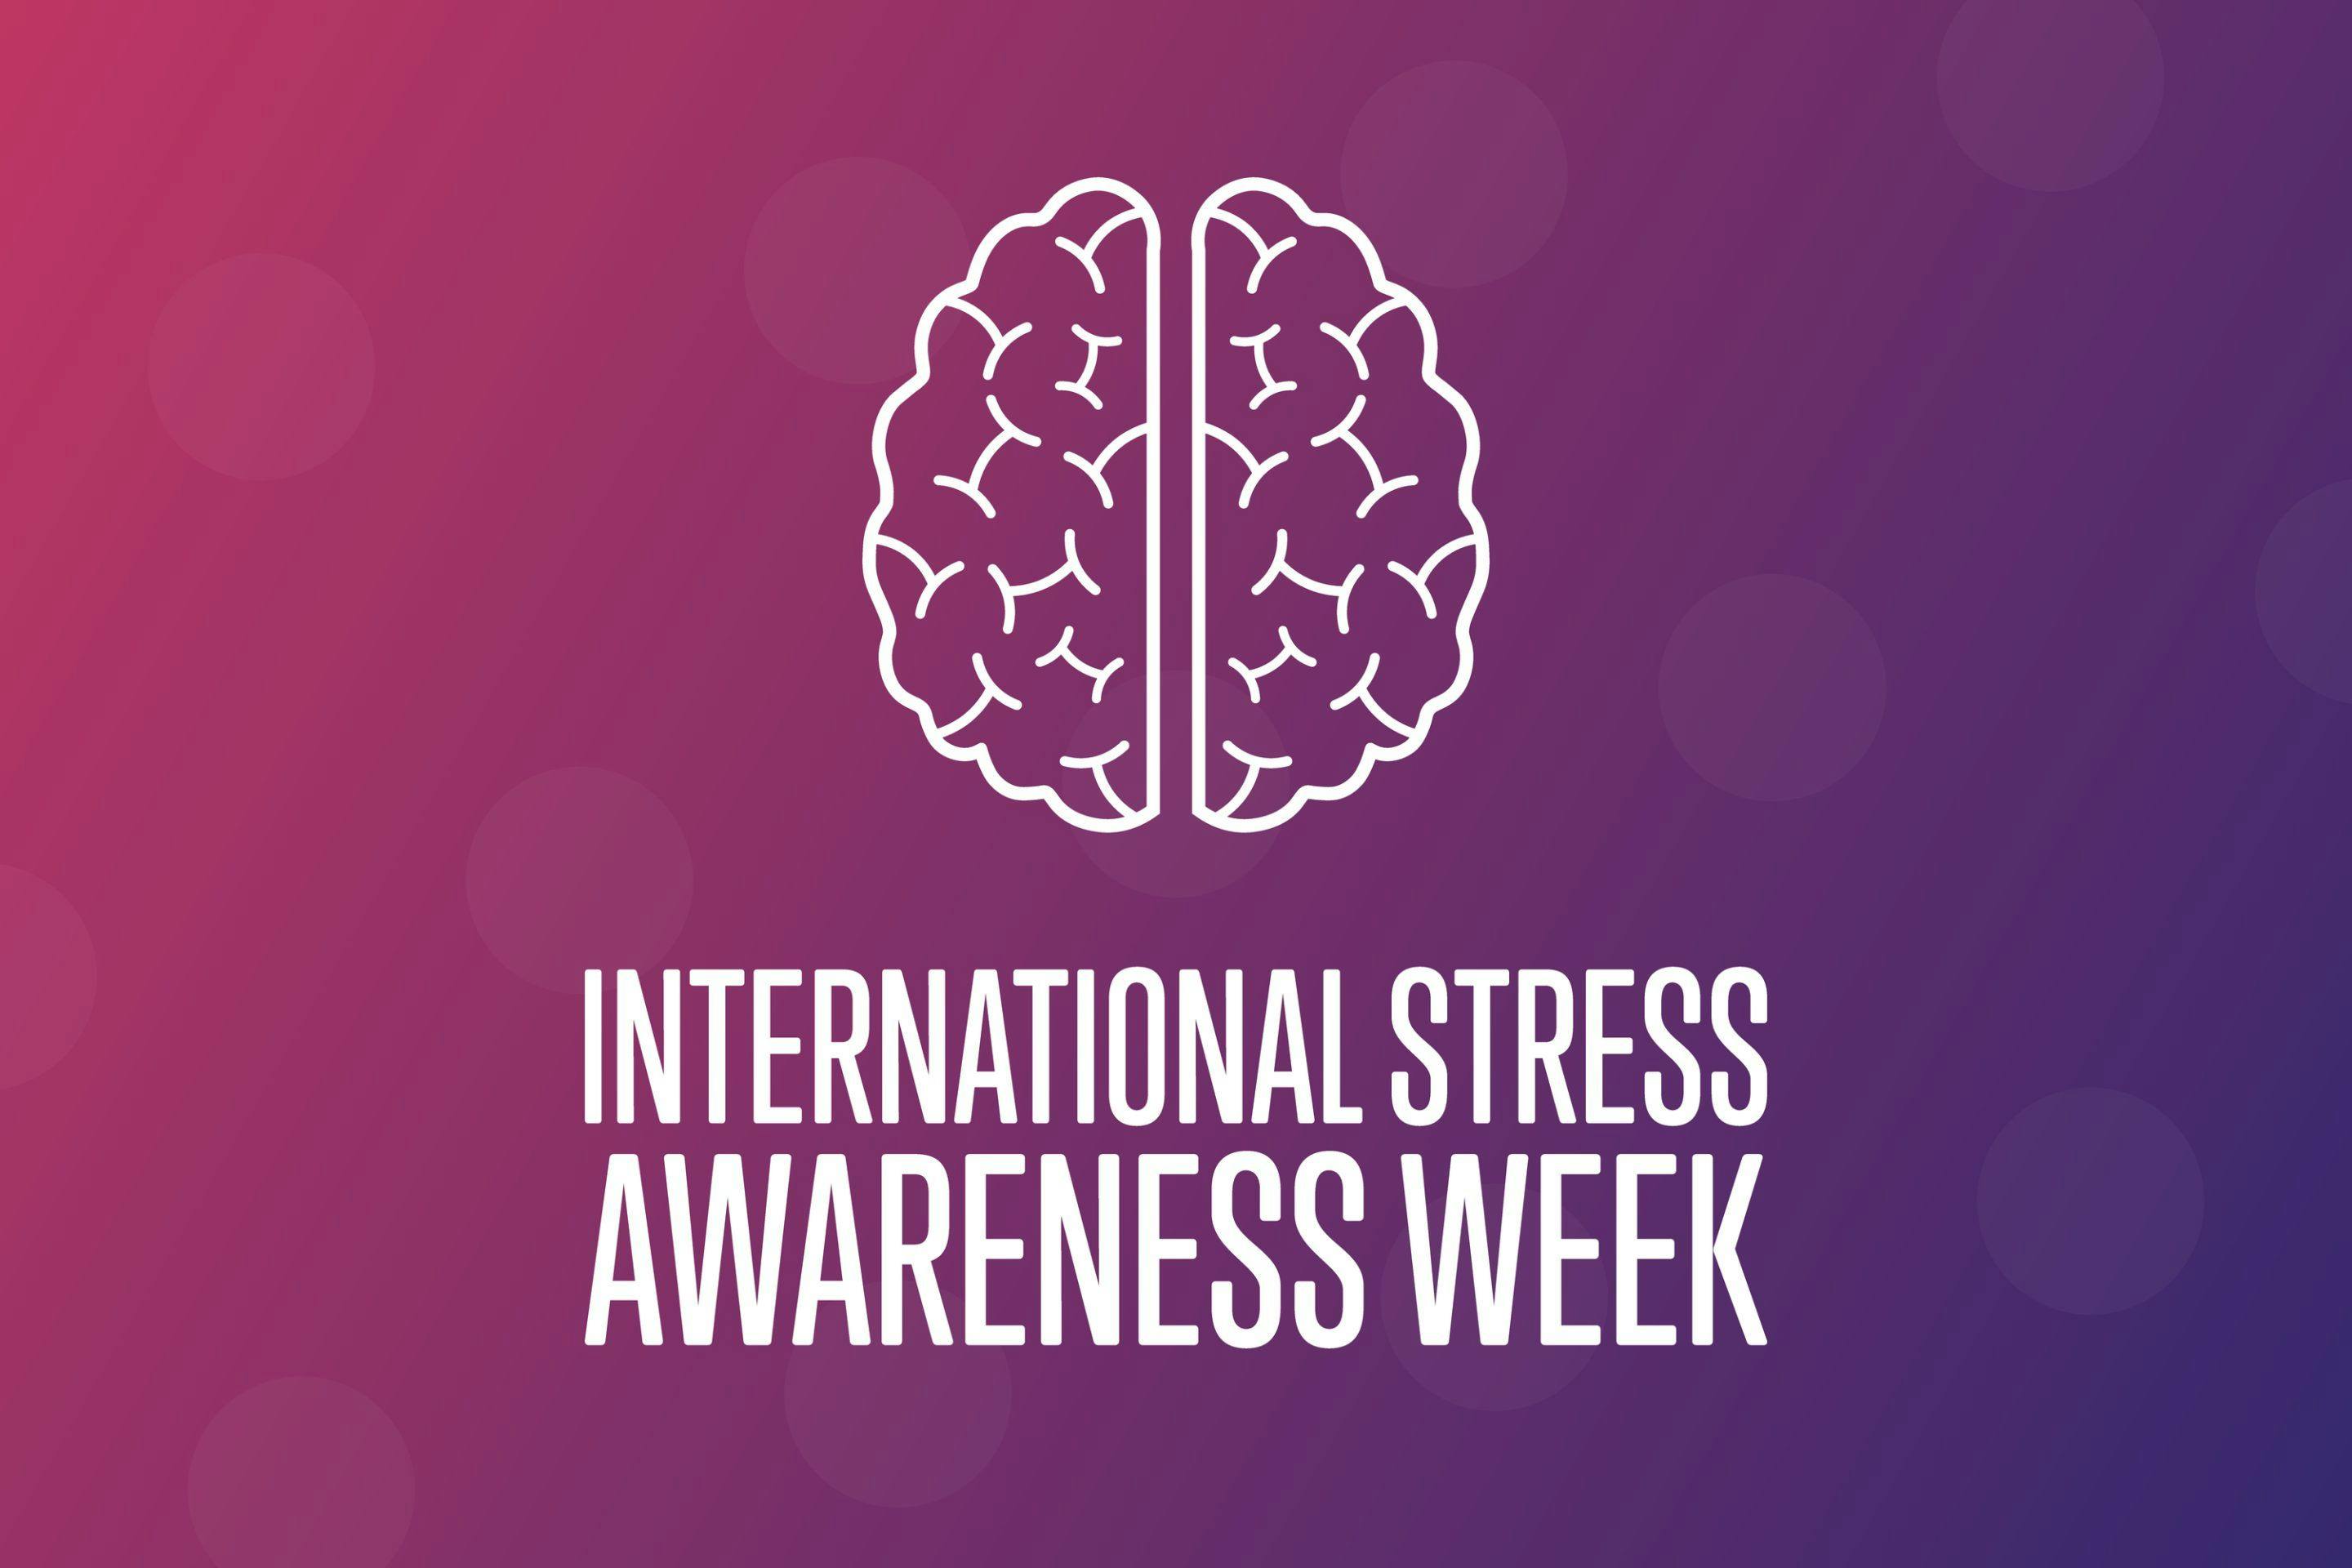 Heading "International Stress Awareness Week" with a brain graphic. 